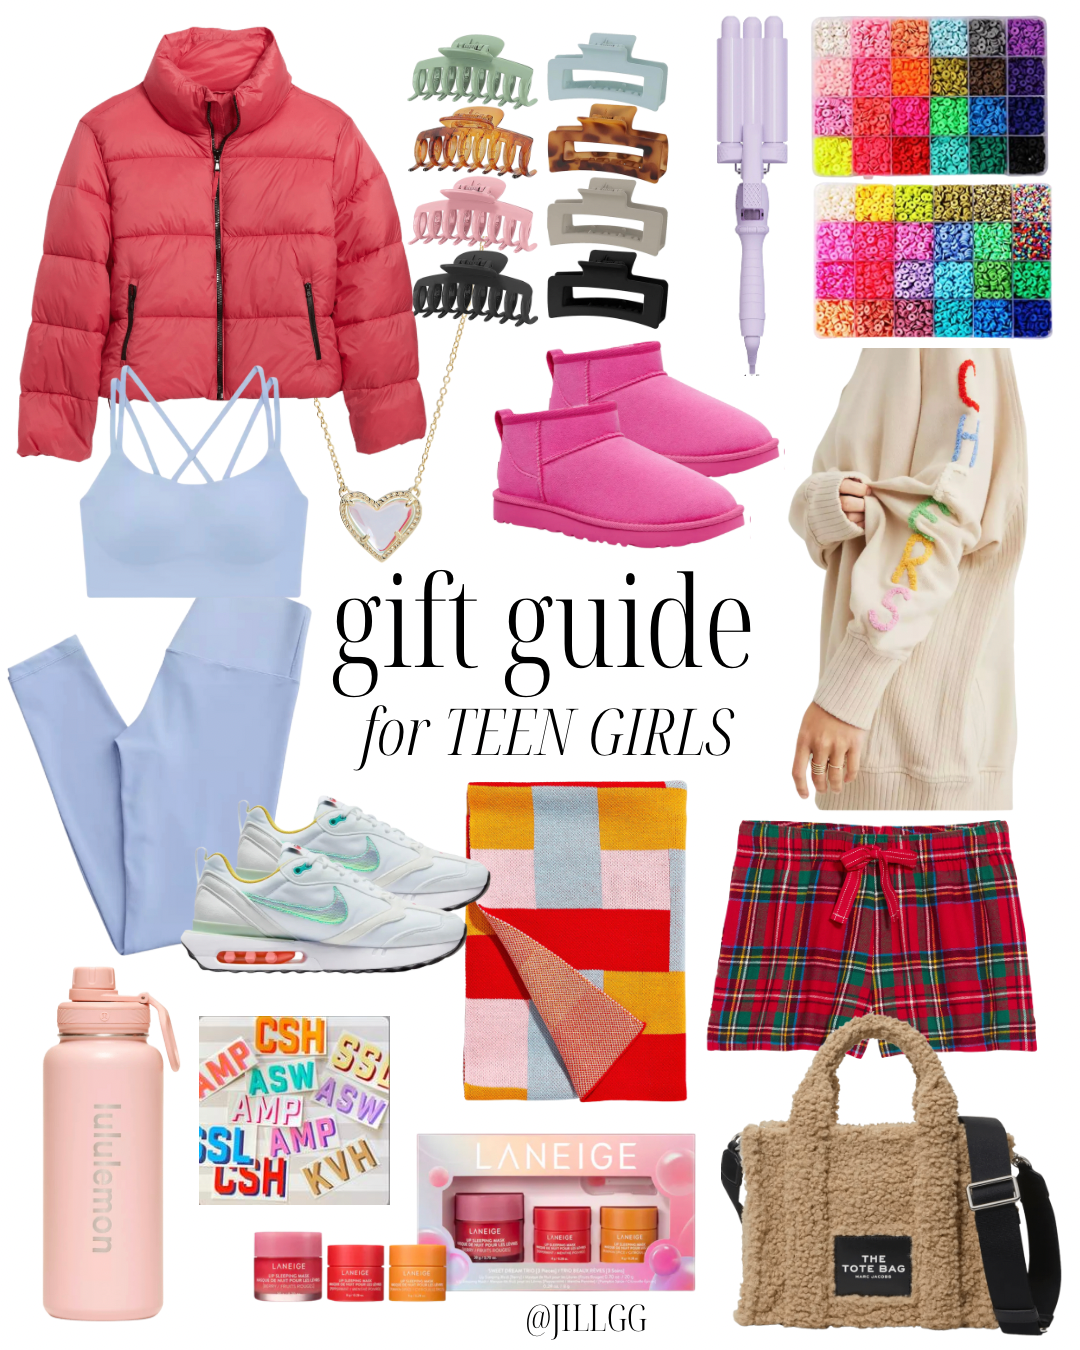 Gift Guide for Teenage Girl - StyleDahlia